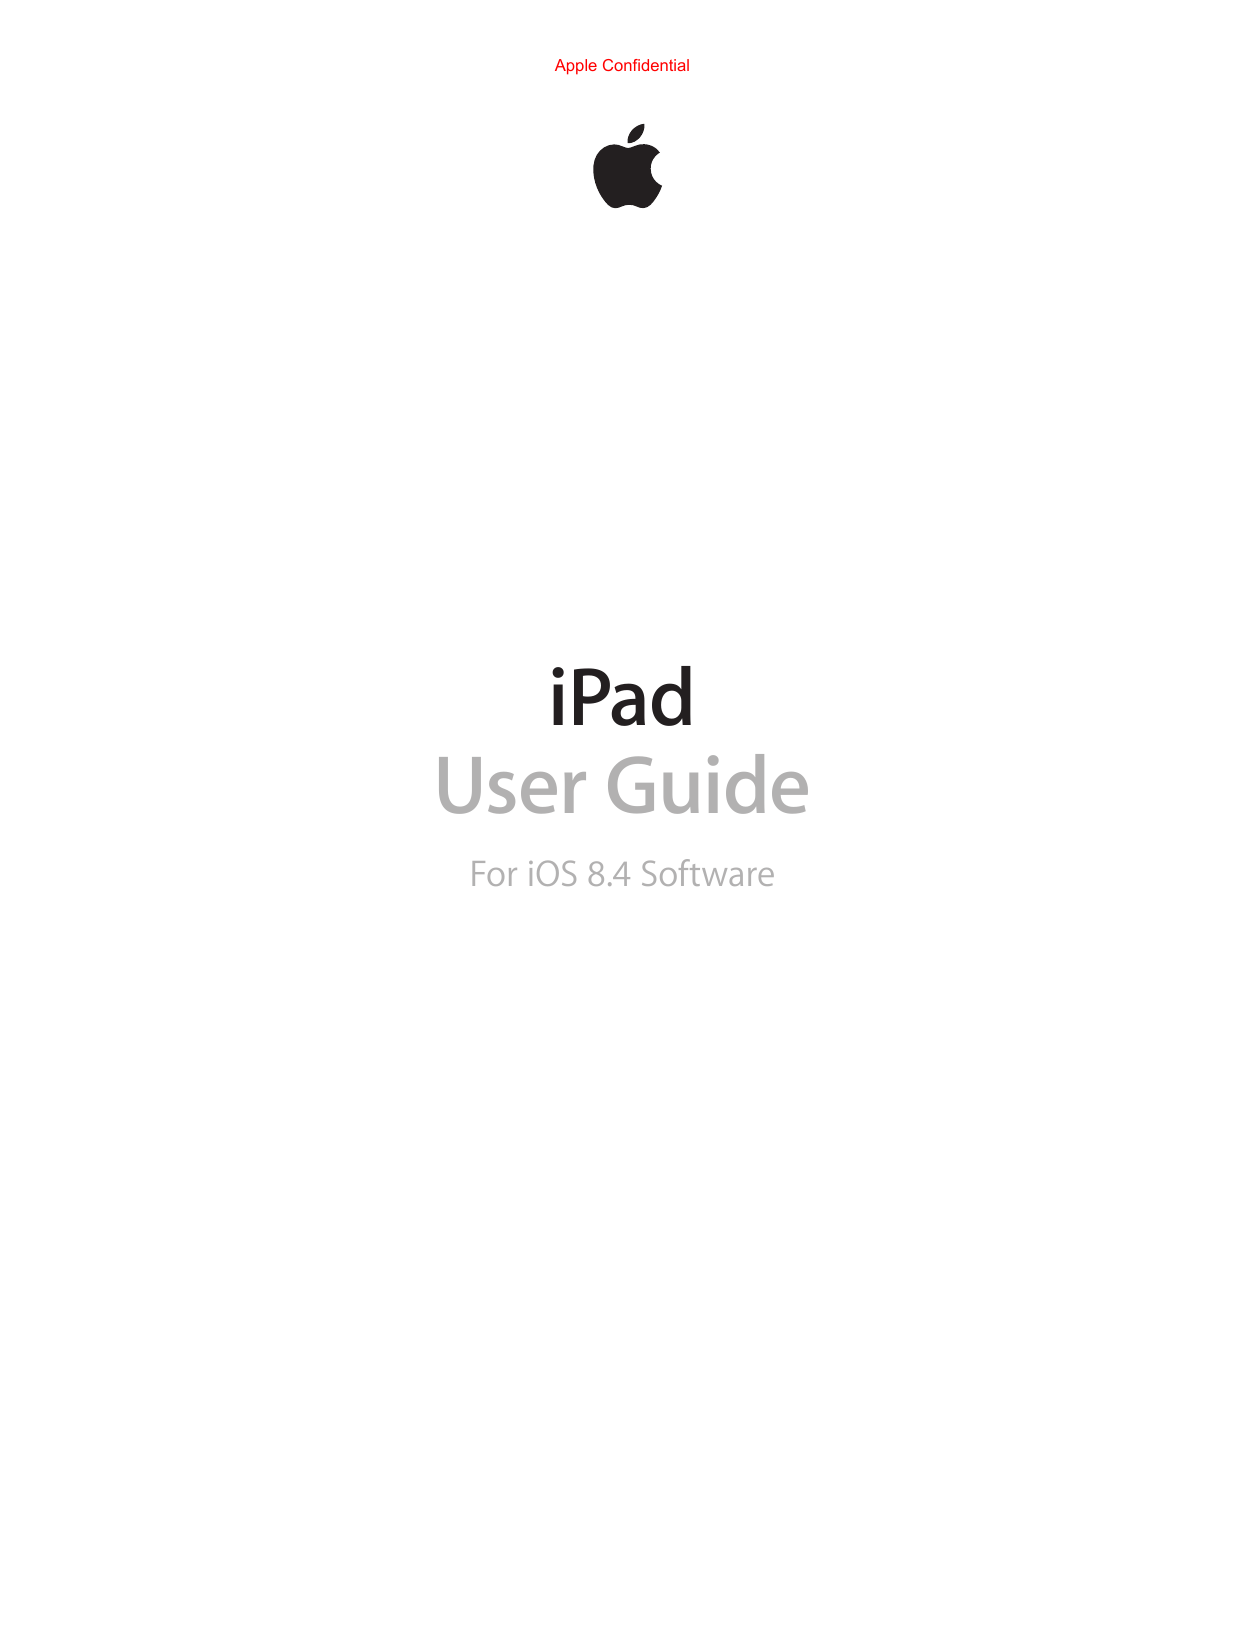 iPadUser GuideFor iOS 8.4 SoftwareApple Confidential